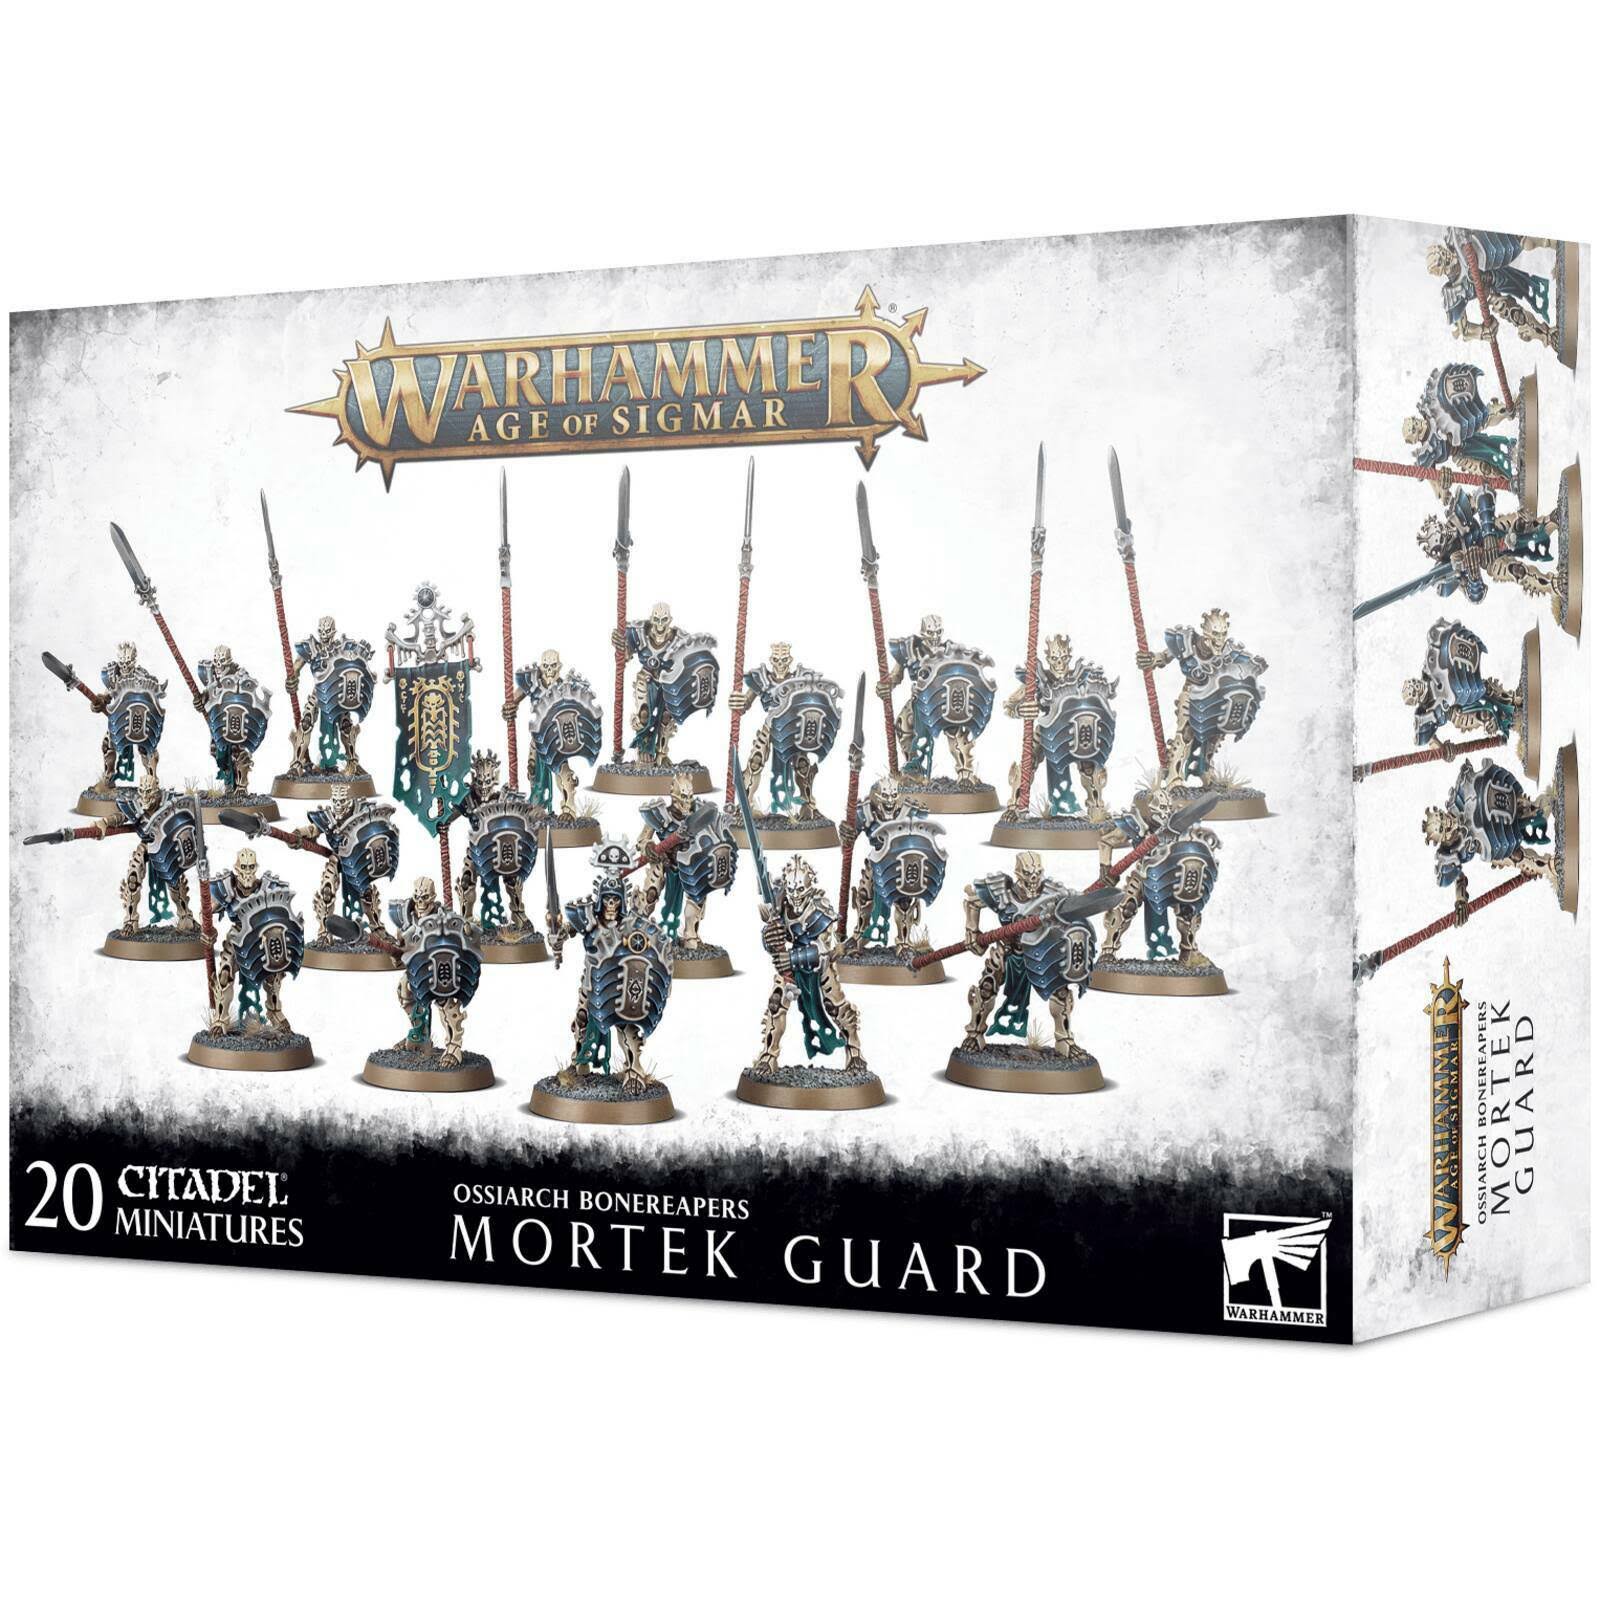 Games Workshop Warhammer Age of Sigmar Undead Mortek Guard Miniature